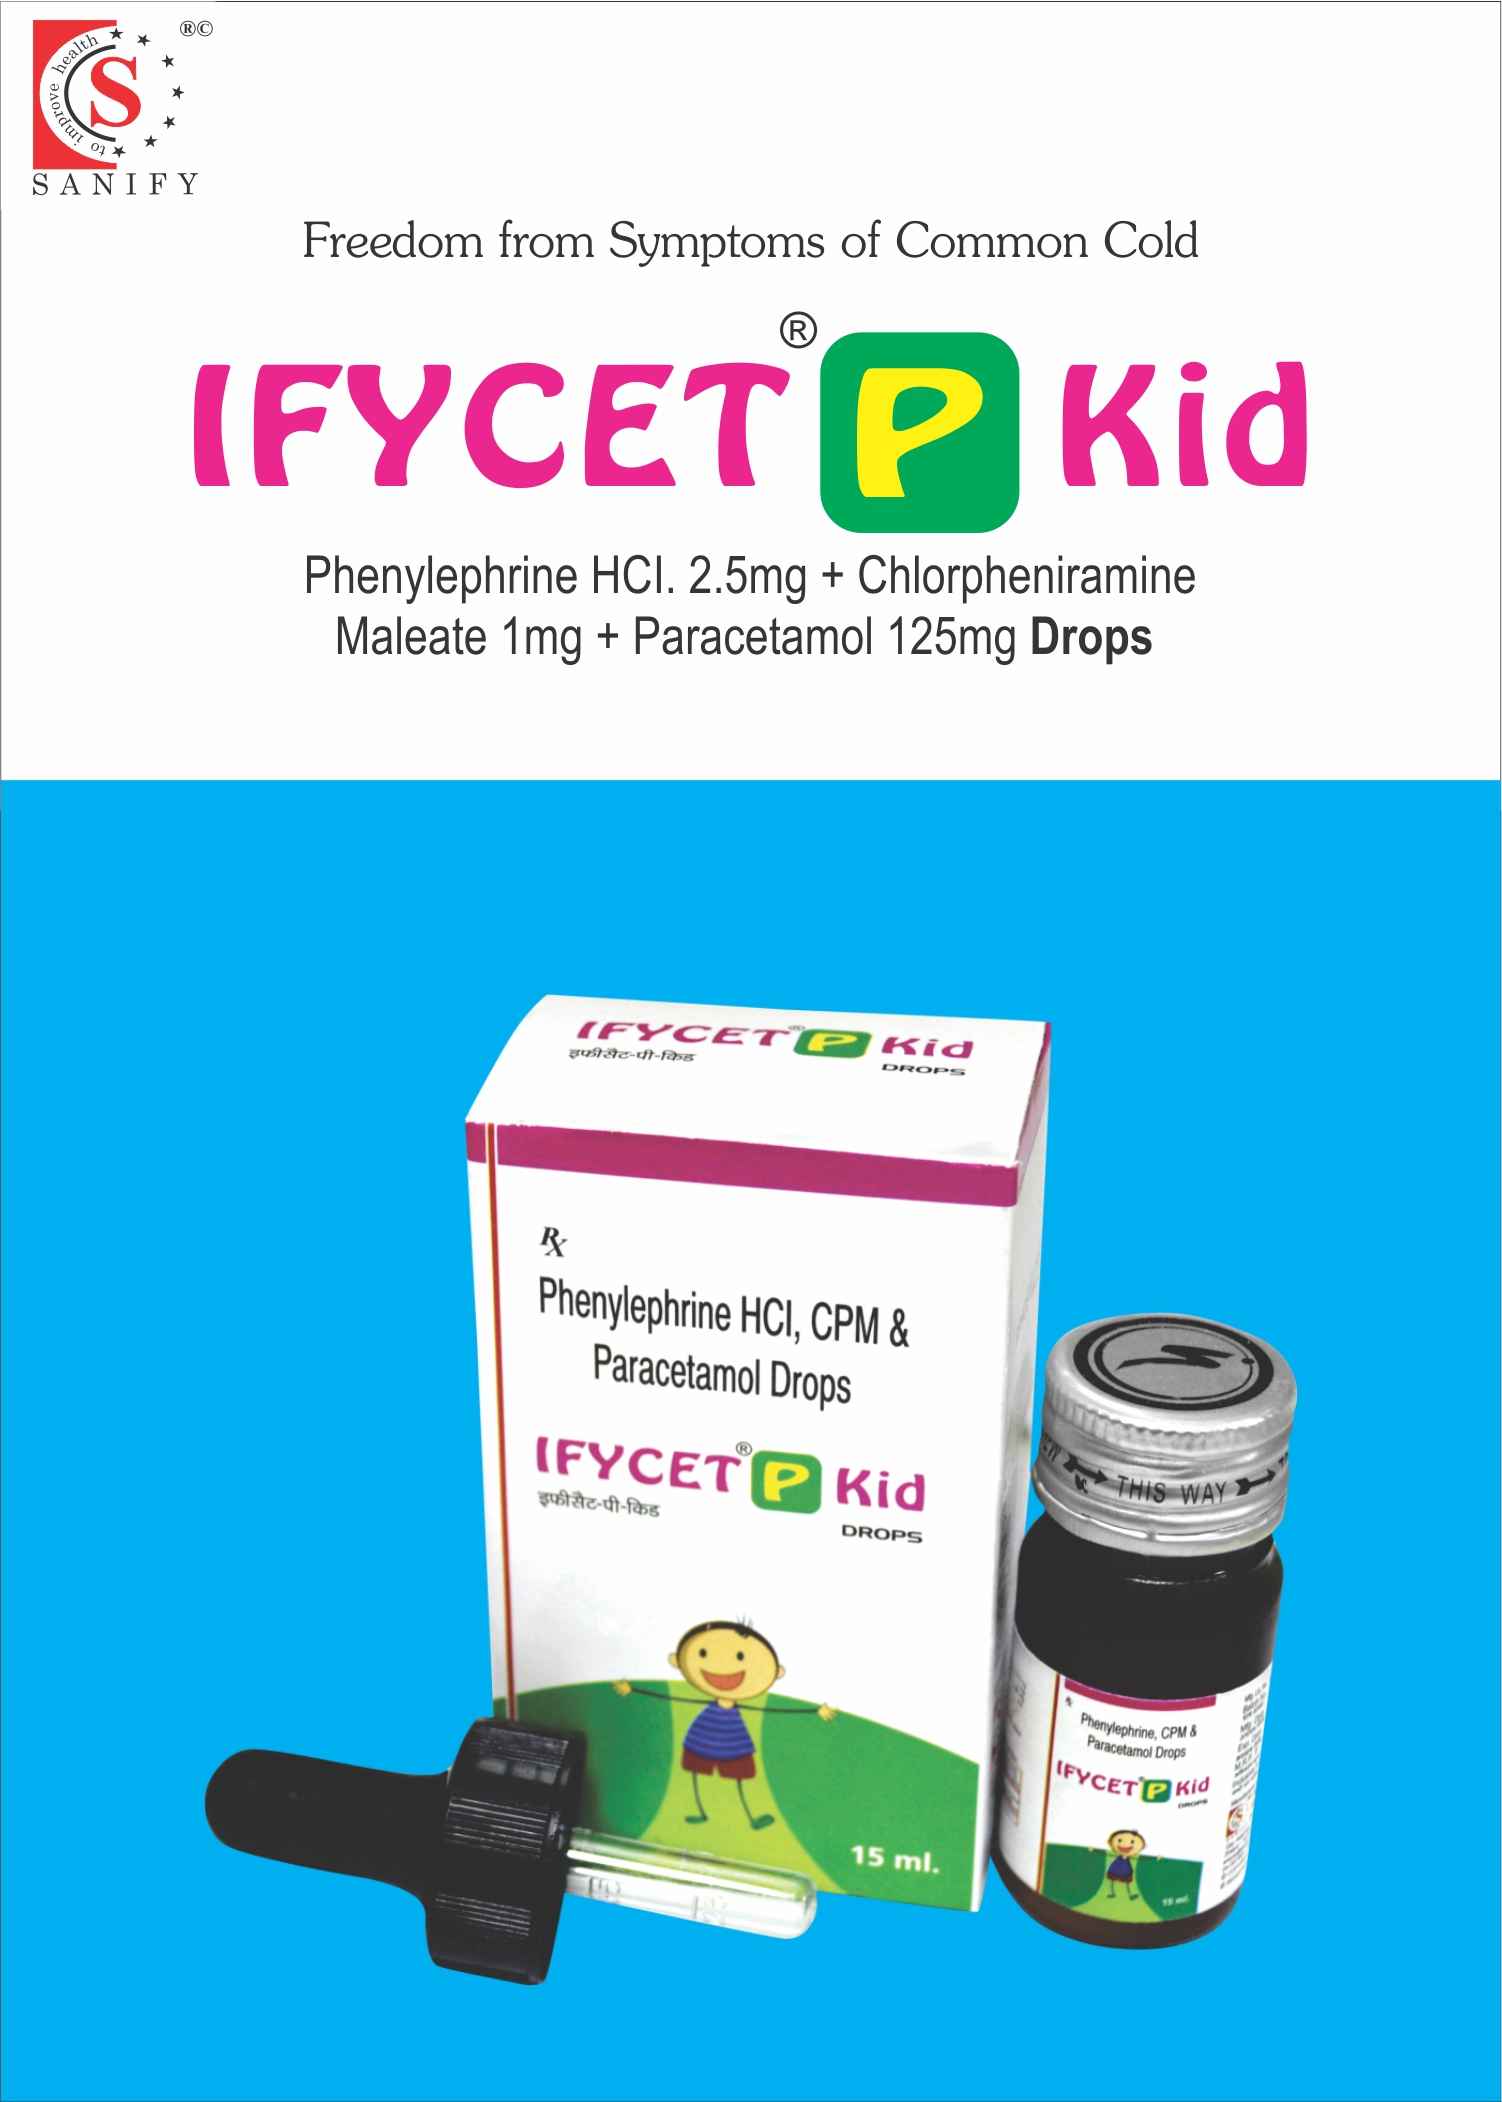 Paracetamol 125mg + Phenylephirine Hcl 2.5mg + Chlorpheniramine Maleate 1mg /ml